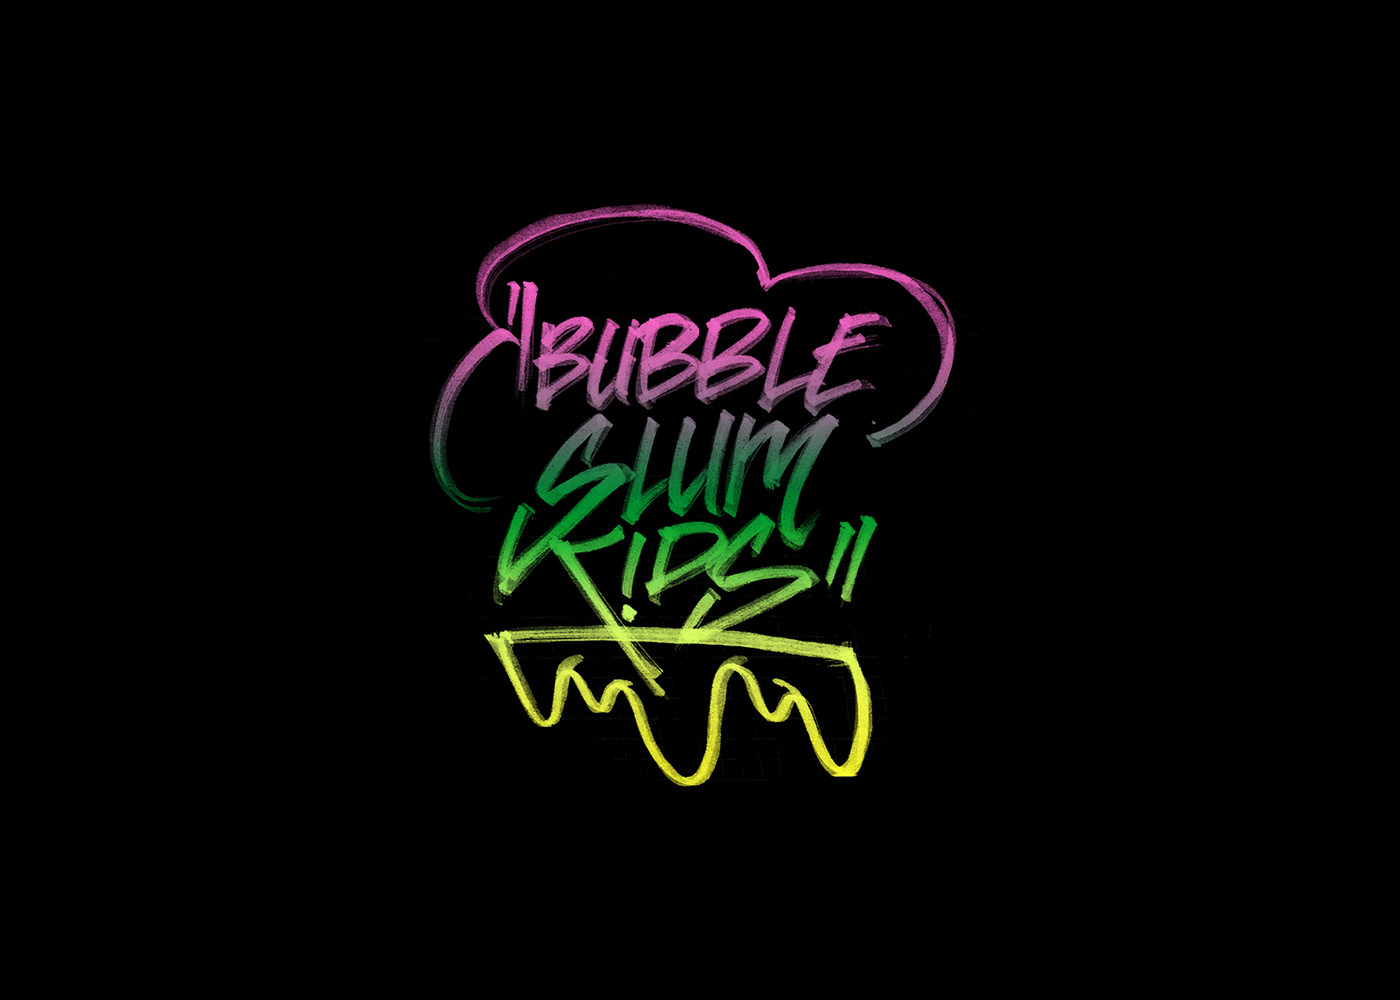 Black Sheep brand bubble bubble slum kids Crayola Custom Noamos slime